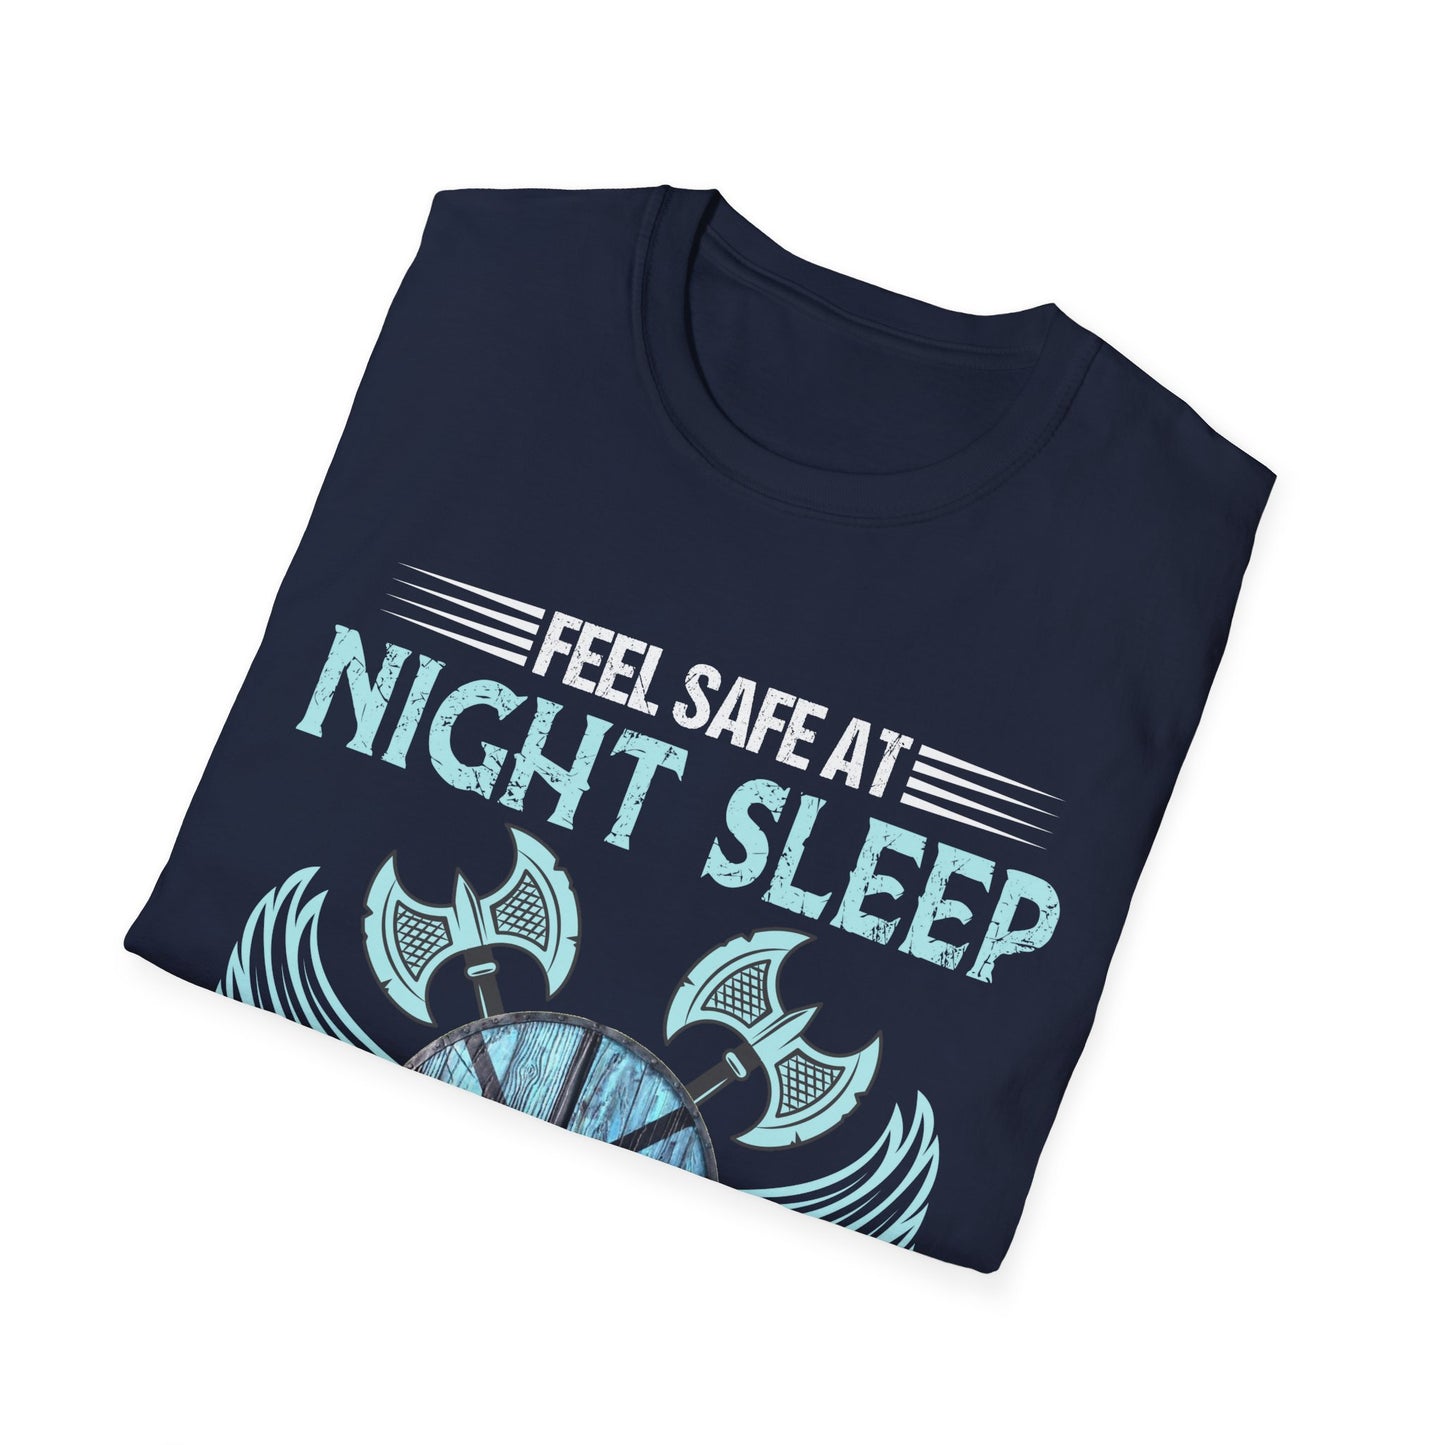 Feel Safe At Night Sleep With A Shieldmaiden Viking T-Shirt